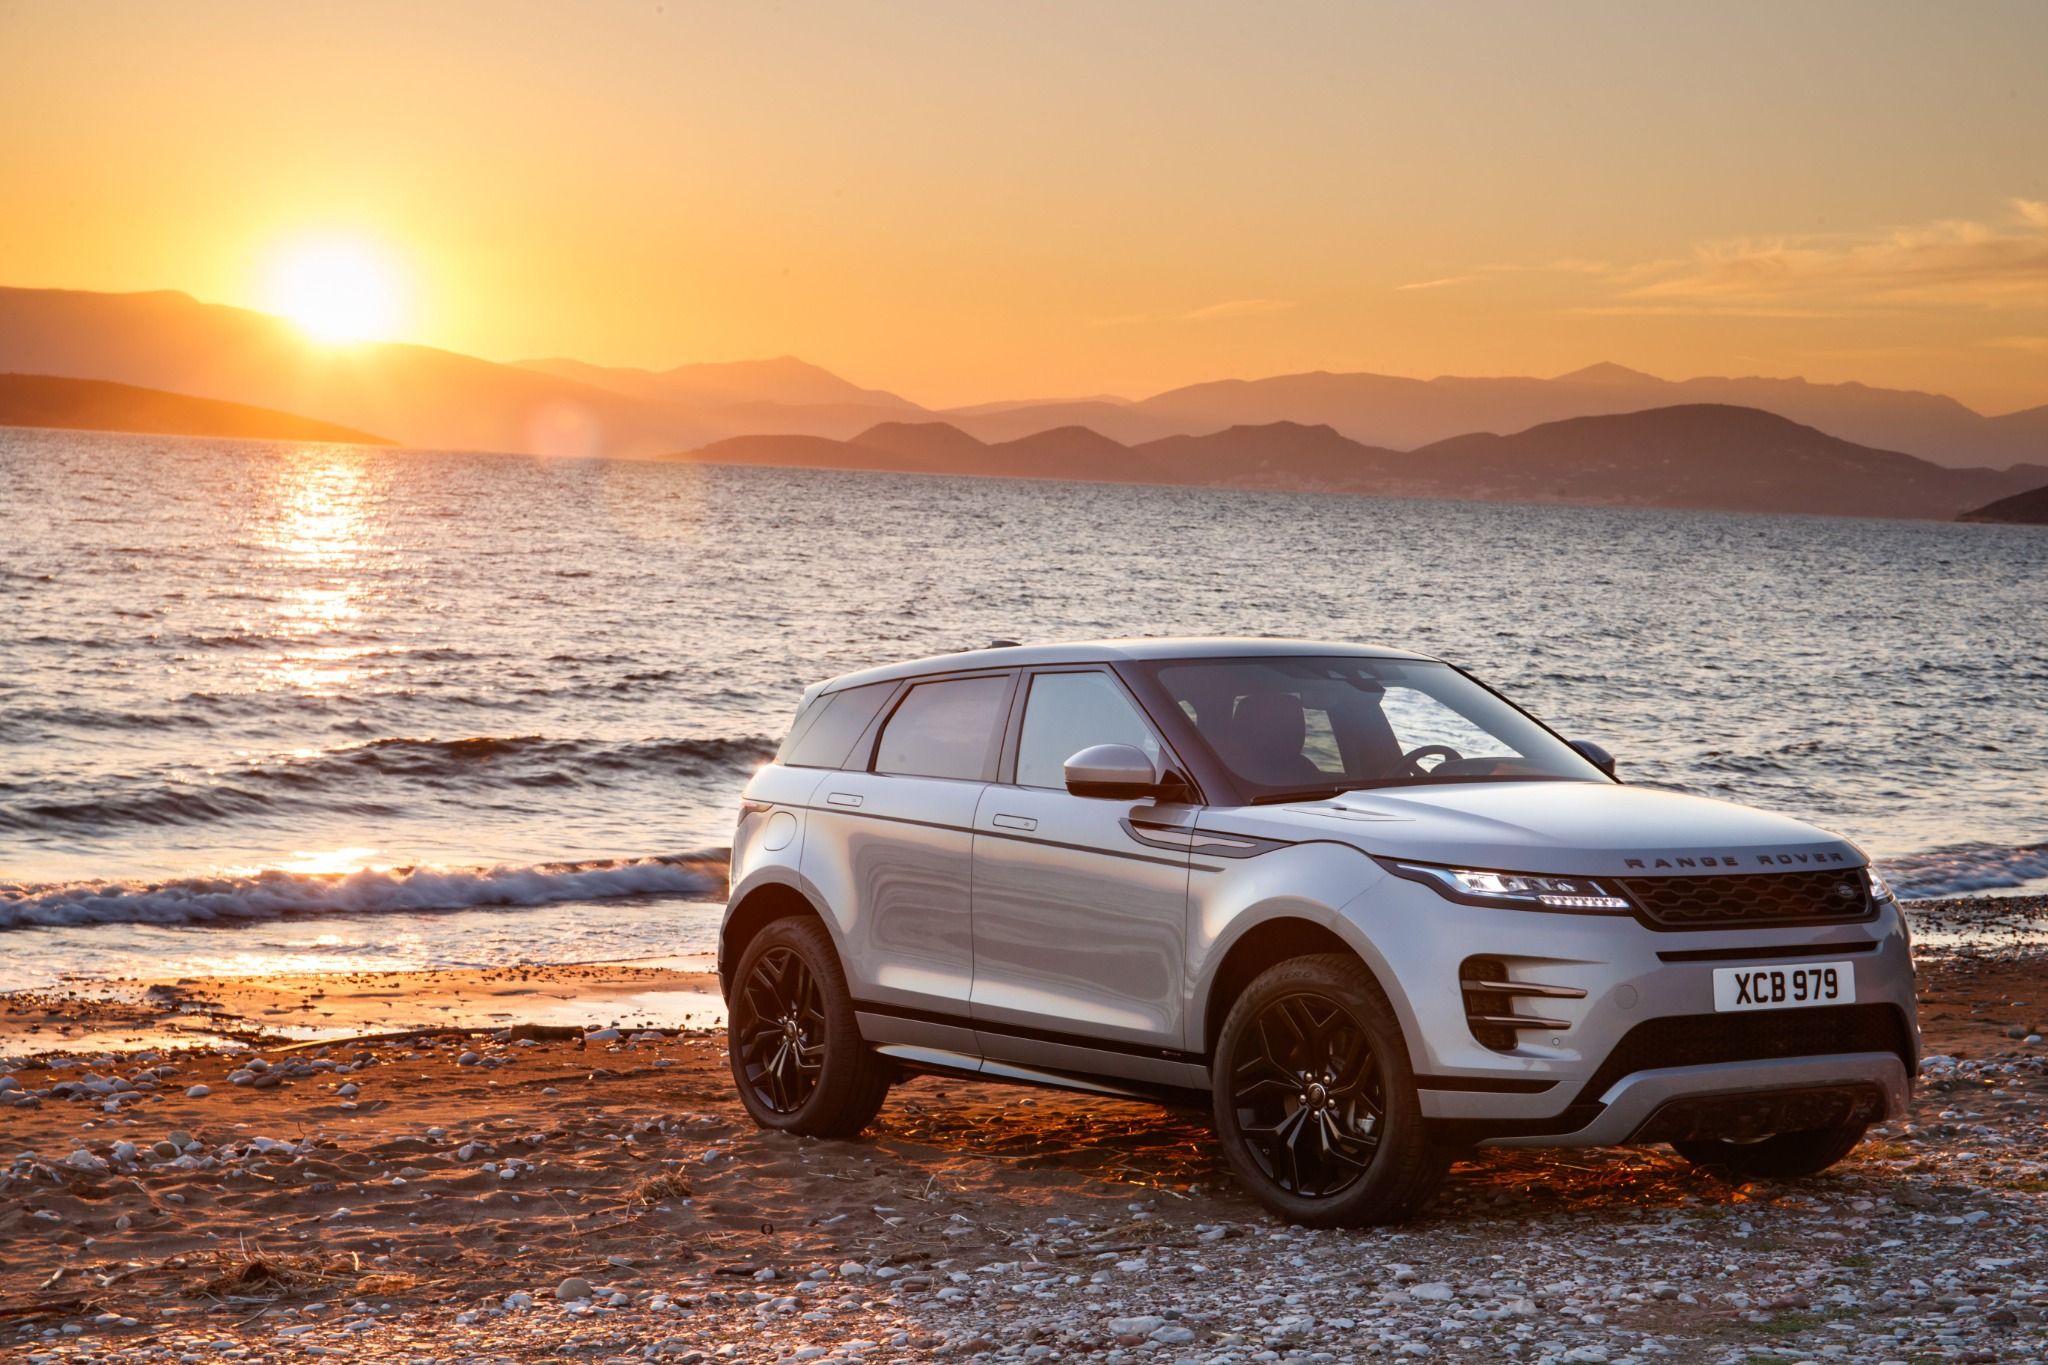 Driven: 2019 Range Rover Evoque